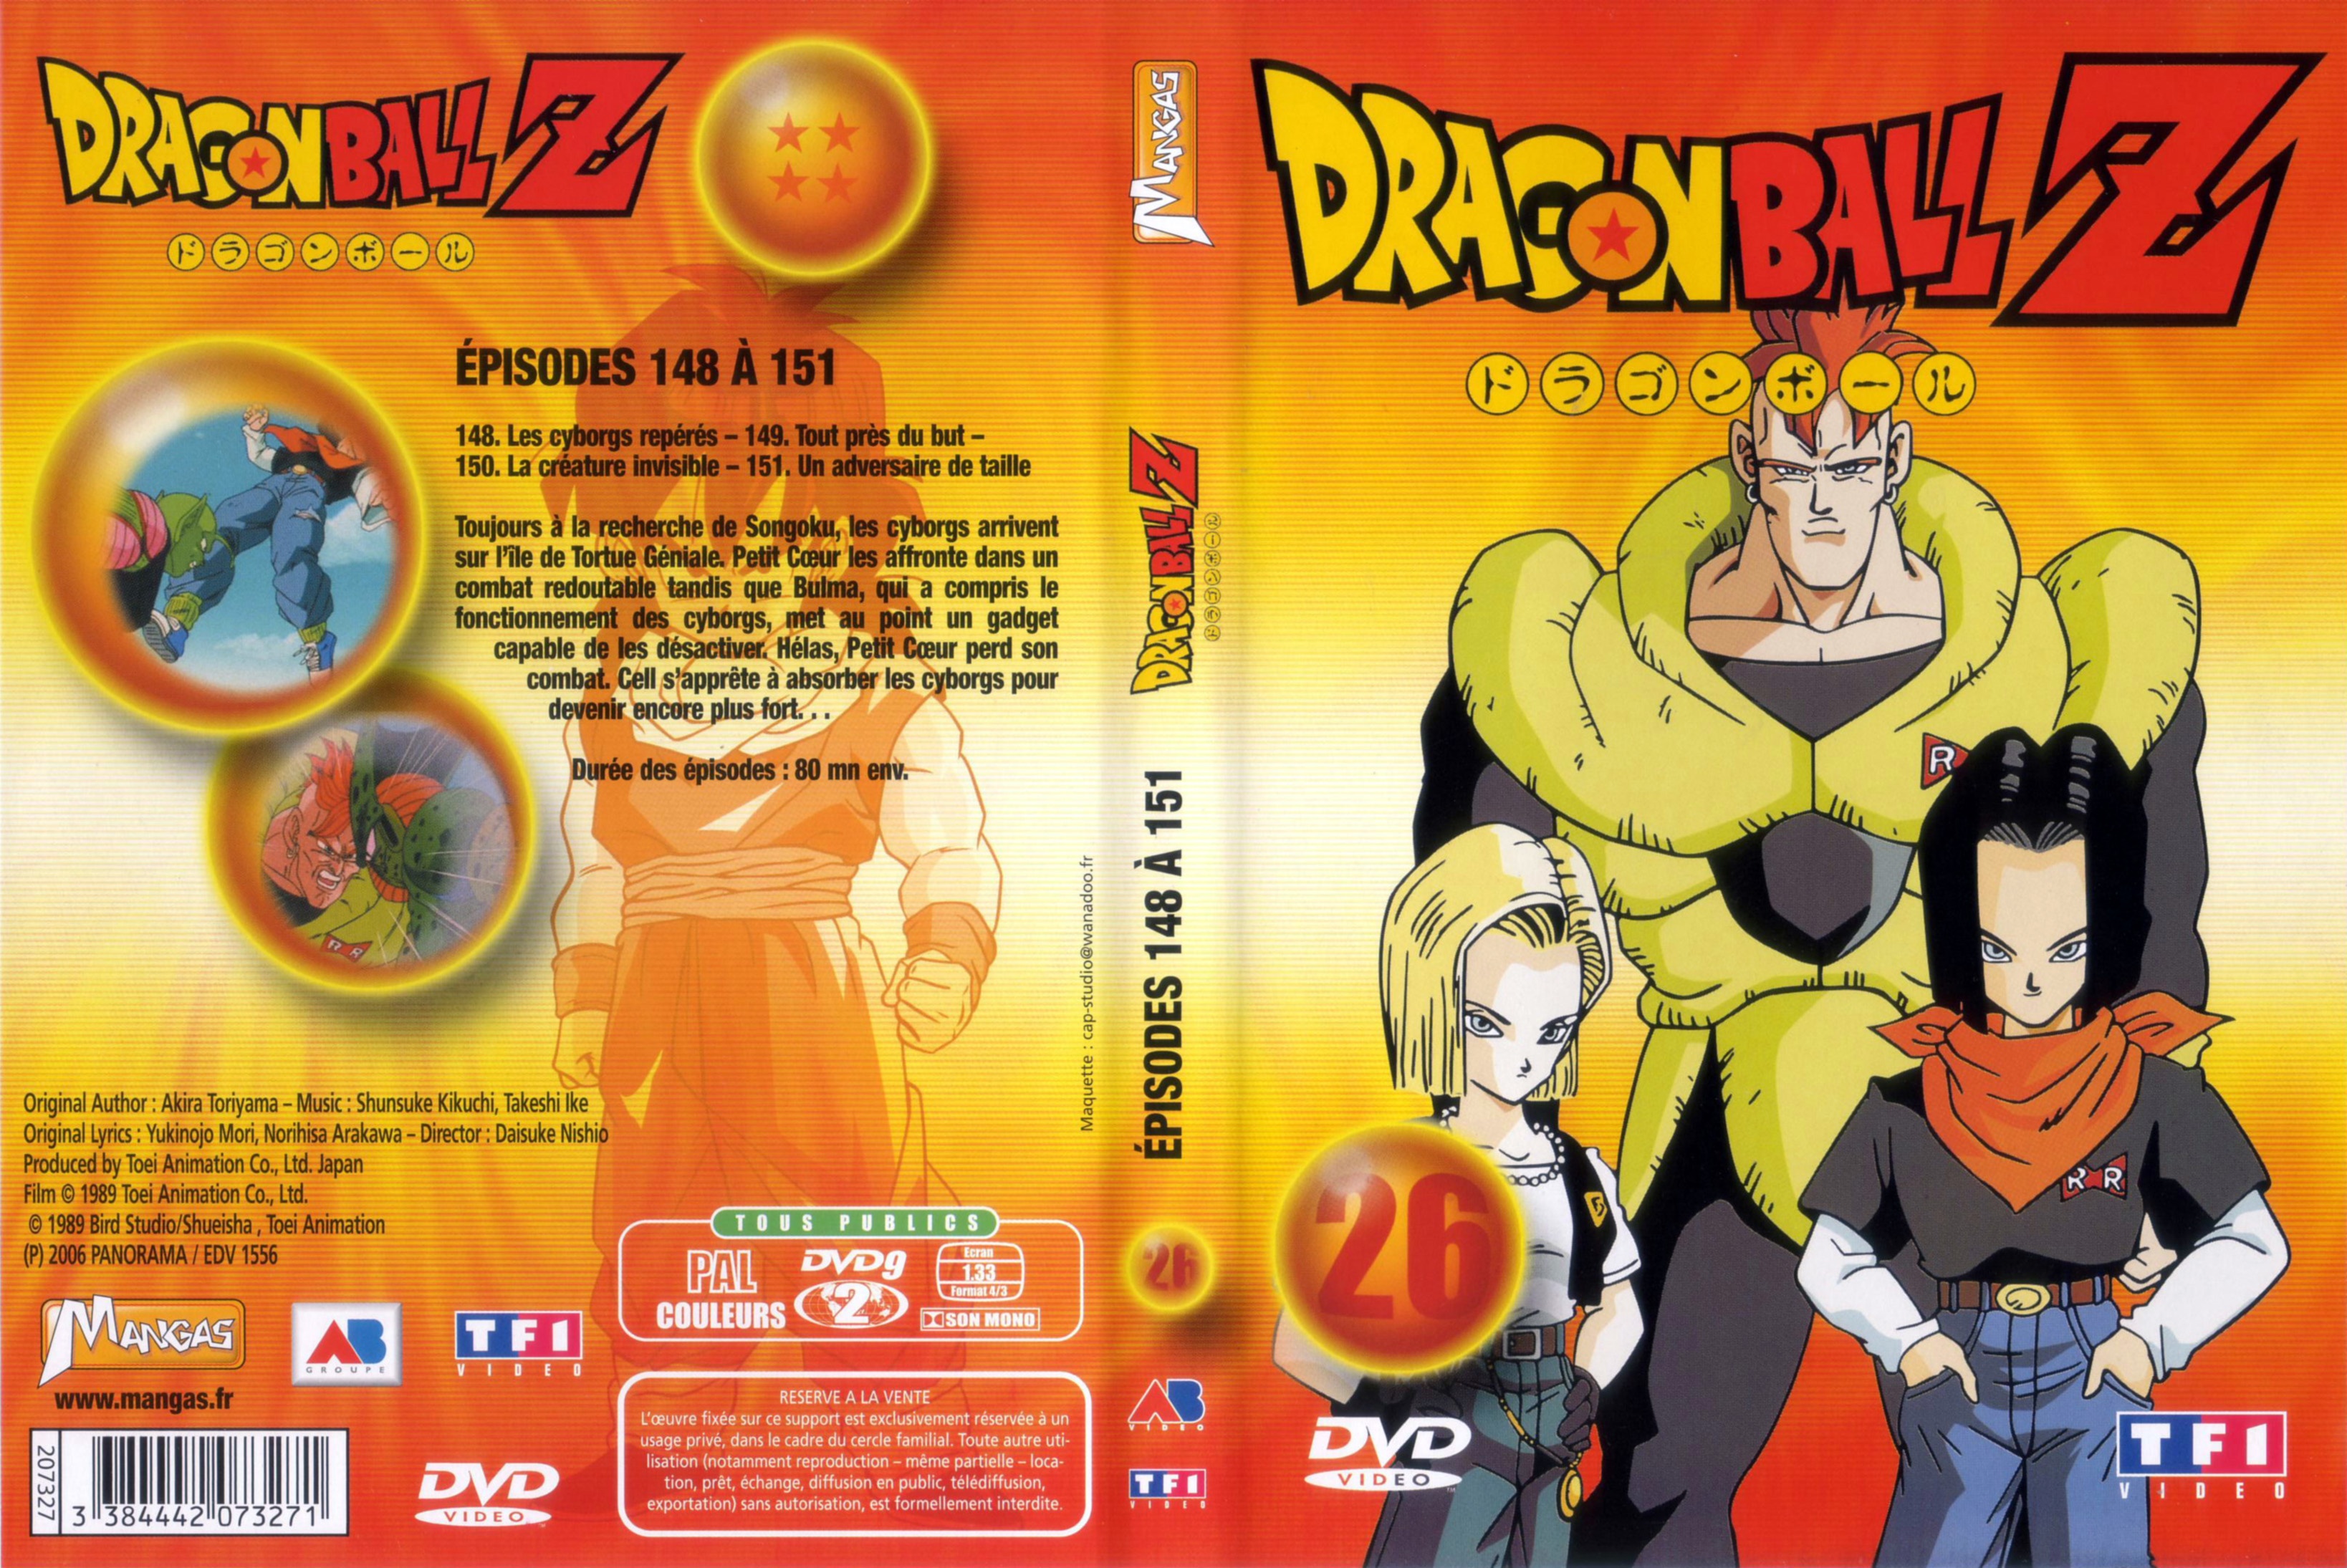 Jaquette DVD Dragon ball Z vol 26